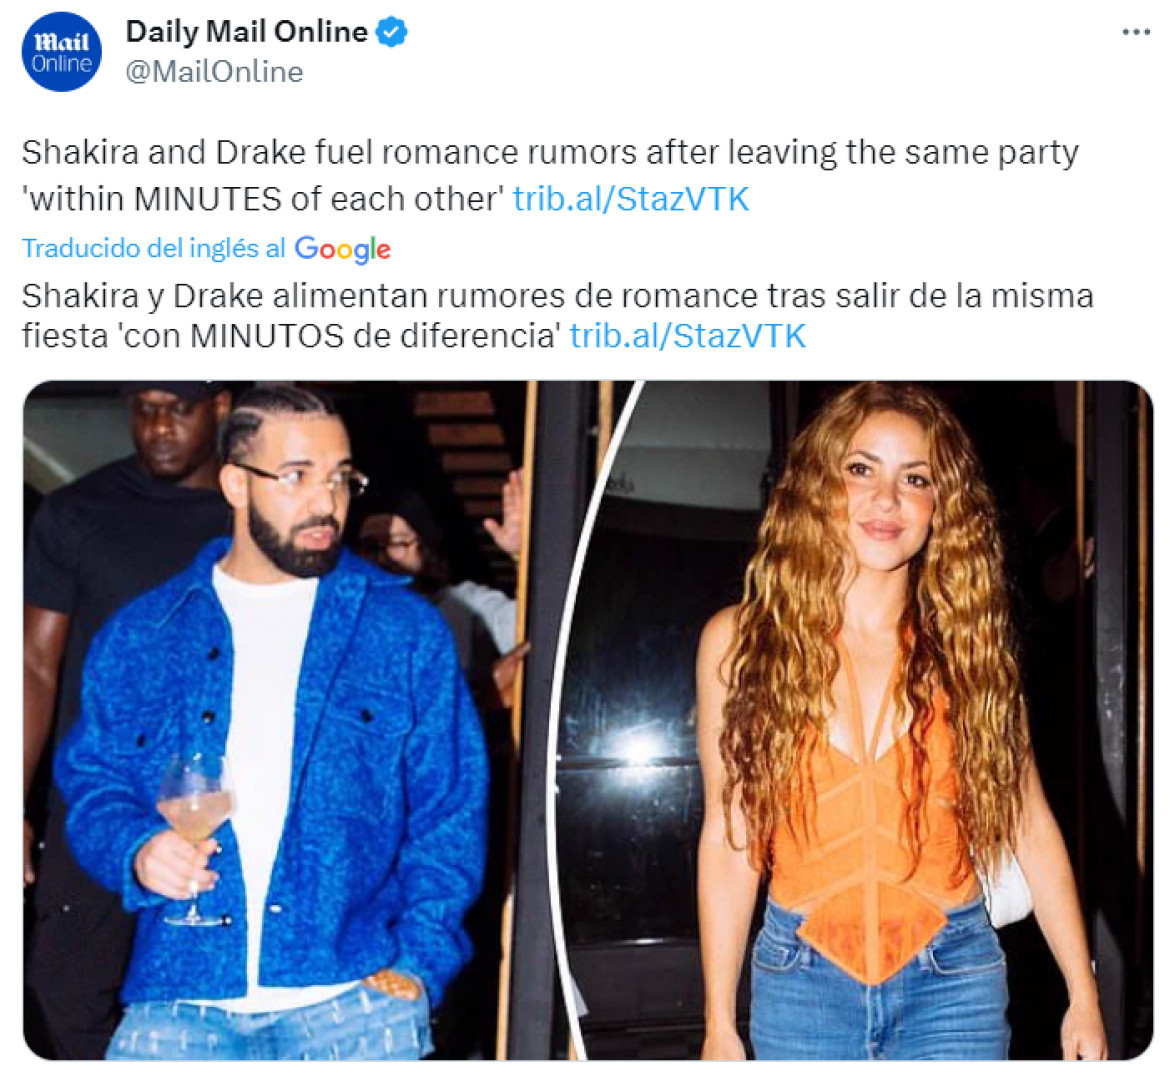 Shakira y Drake saliendo de la misma fiesta. Foto: Daily Mail.